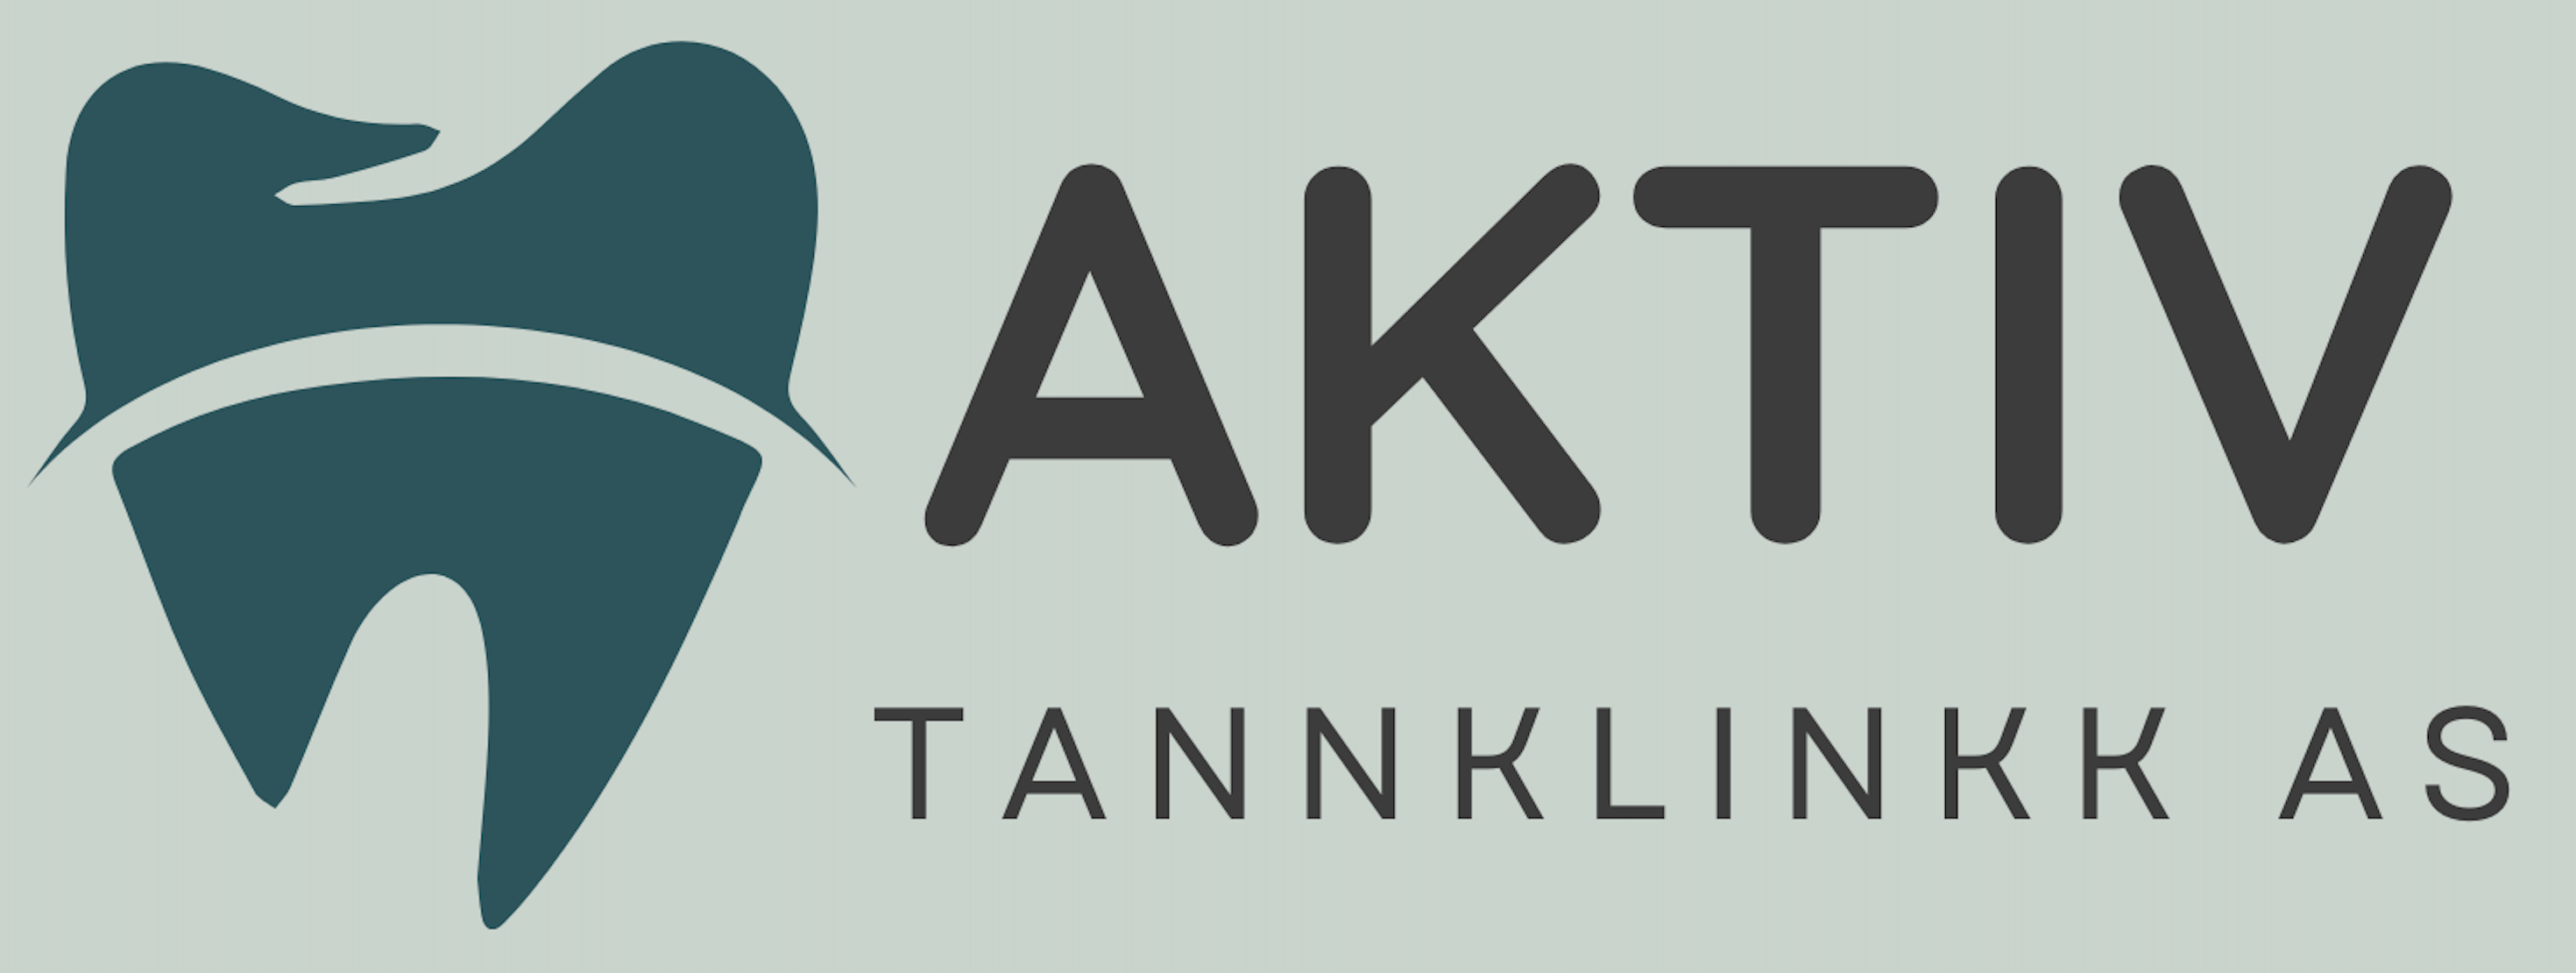 Logo for Aktiv Tannklinikk AS